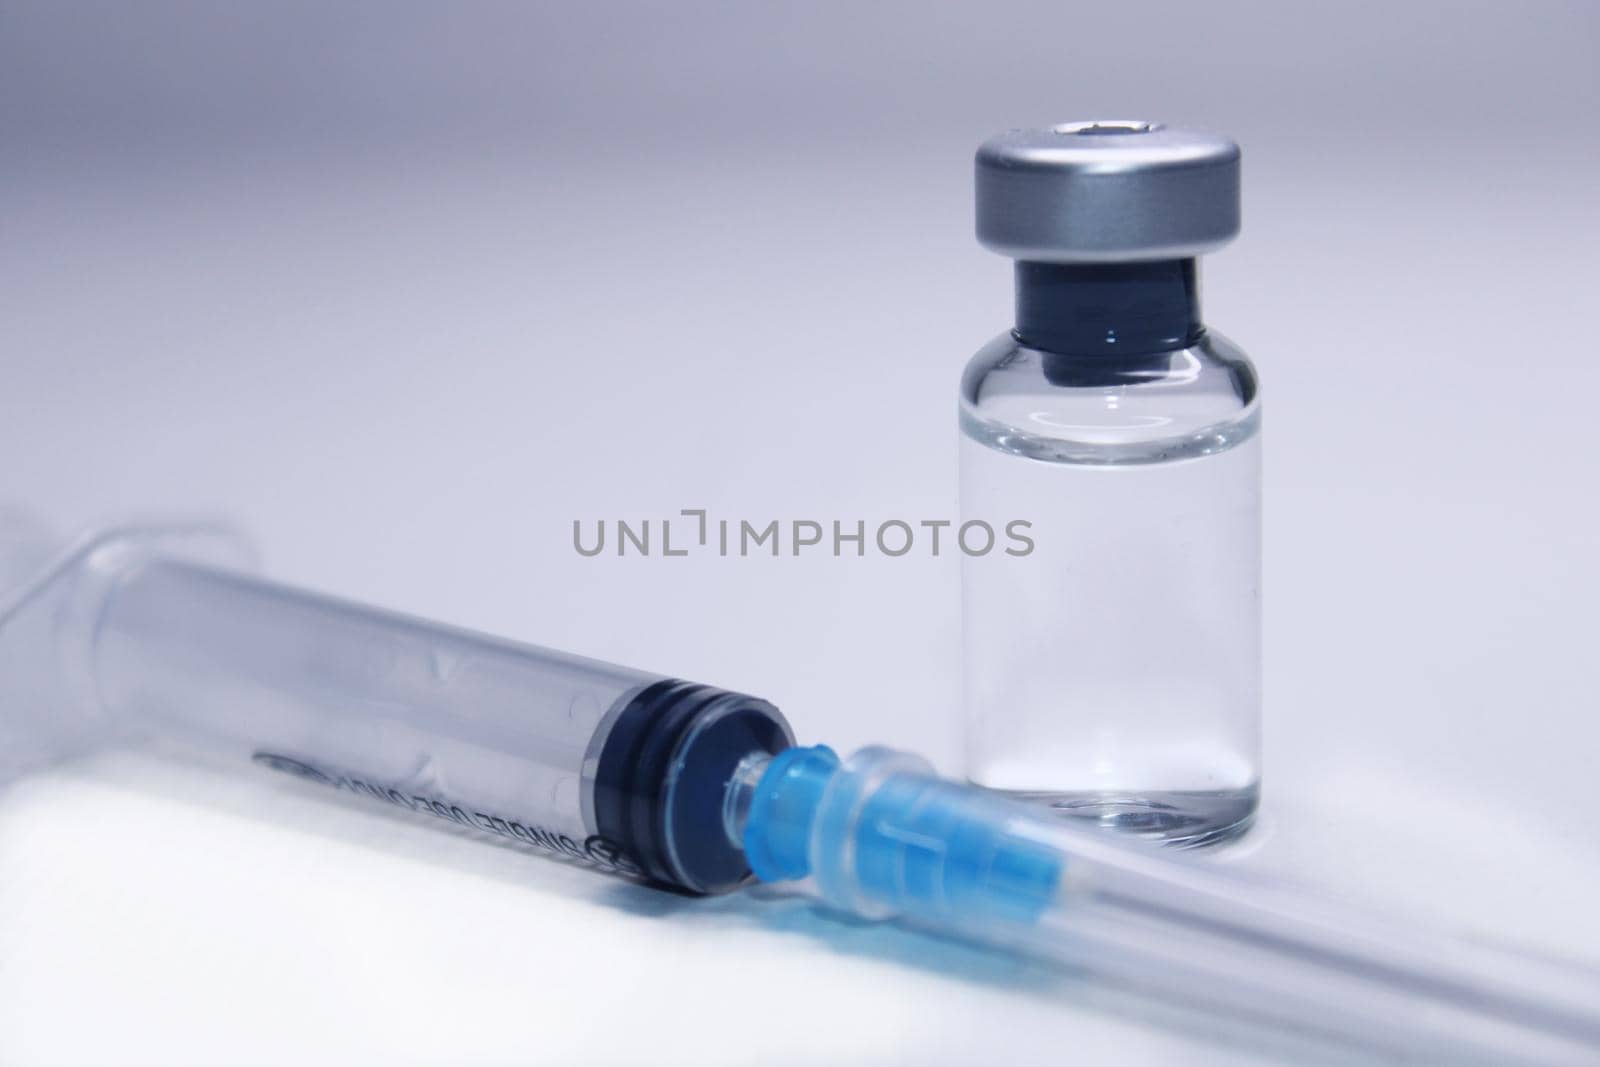 Syringe and a bottle of medicine close-up on a light background. Blurred background.